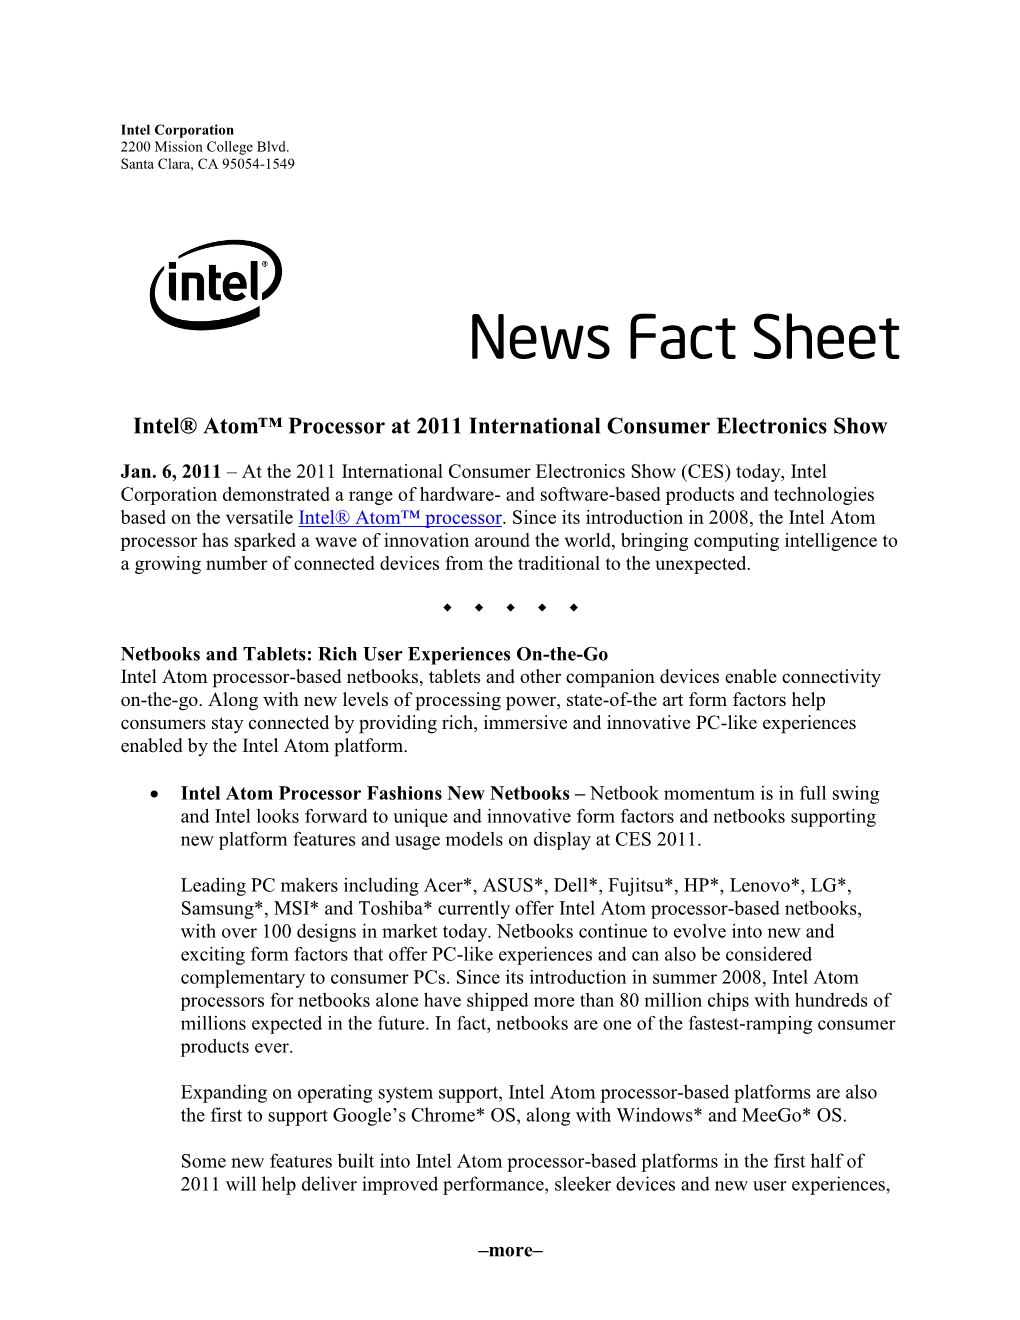 Intel® Atom™ Processor at 2011 International Consumer Electronics Show